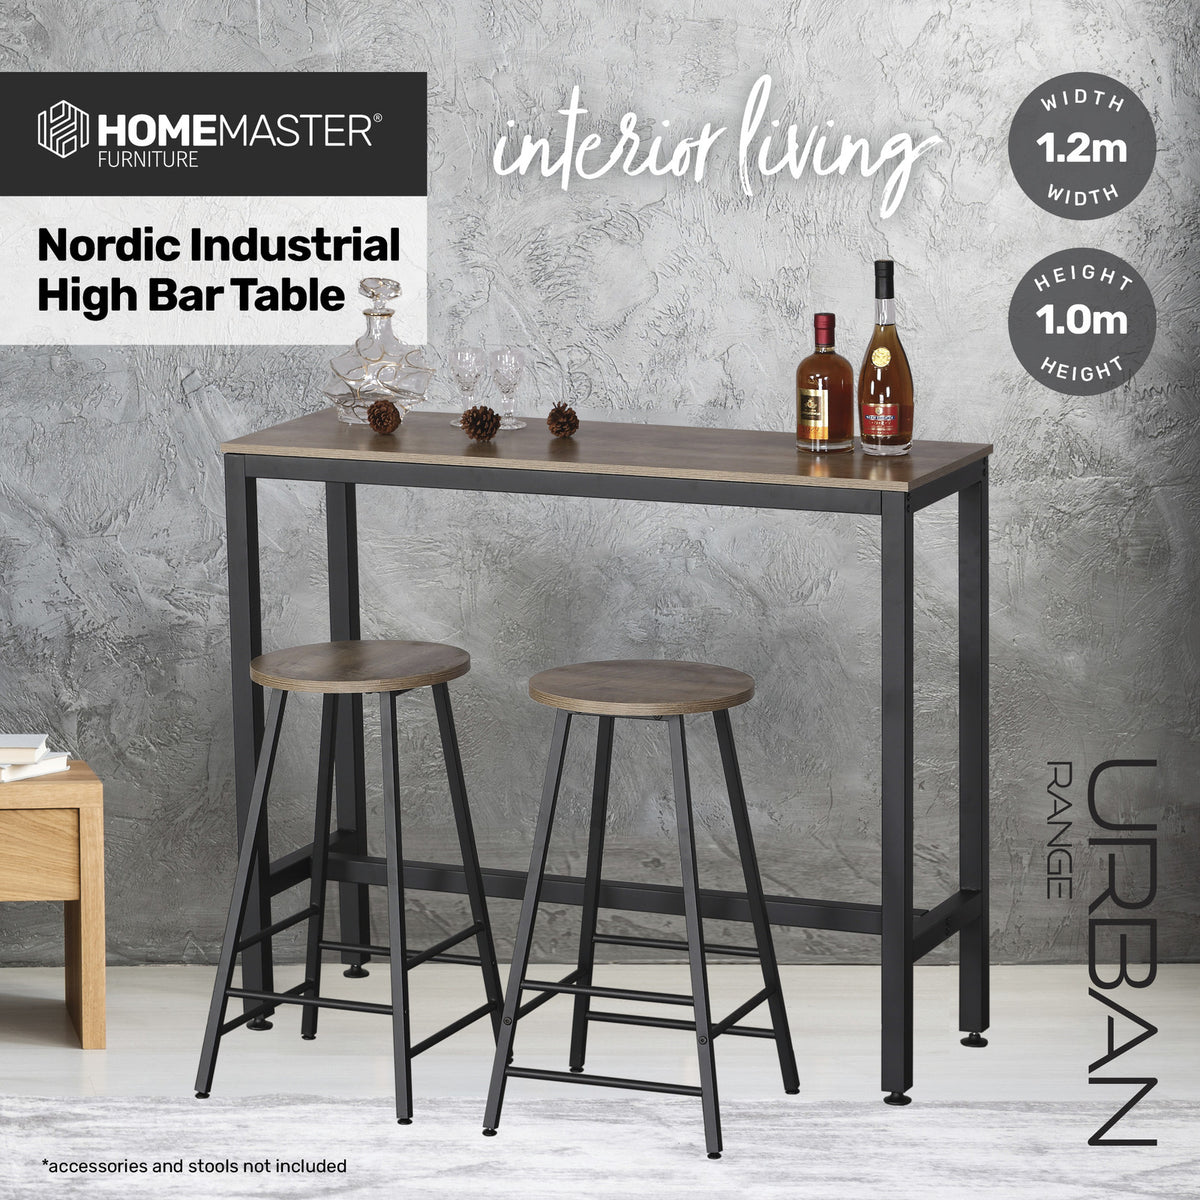 Home Master High Bar Table Nordic Industrial Design Stylish Modern 120cm